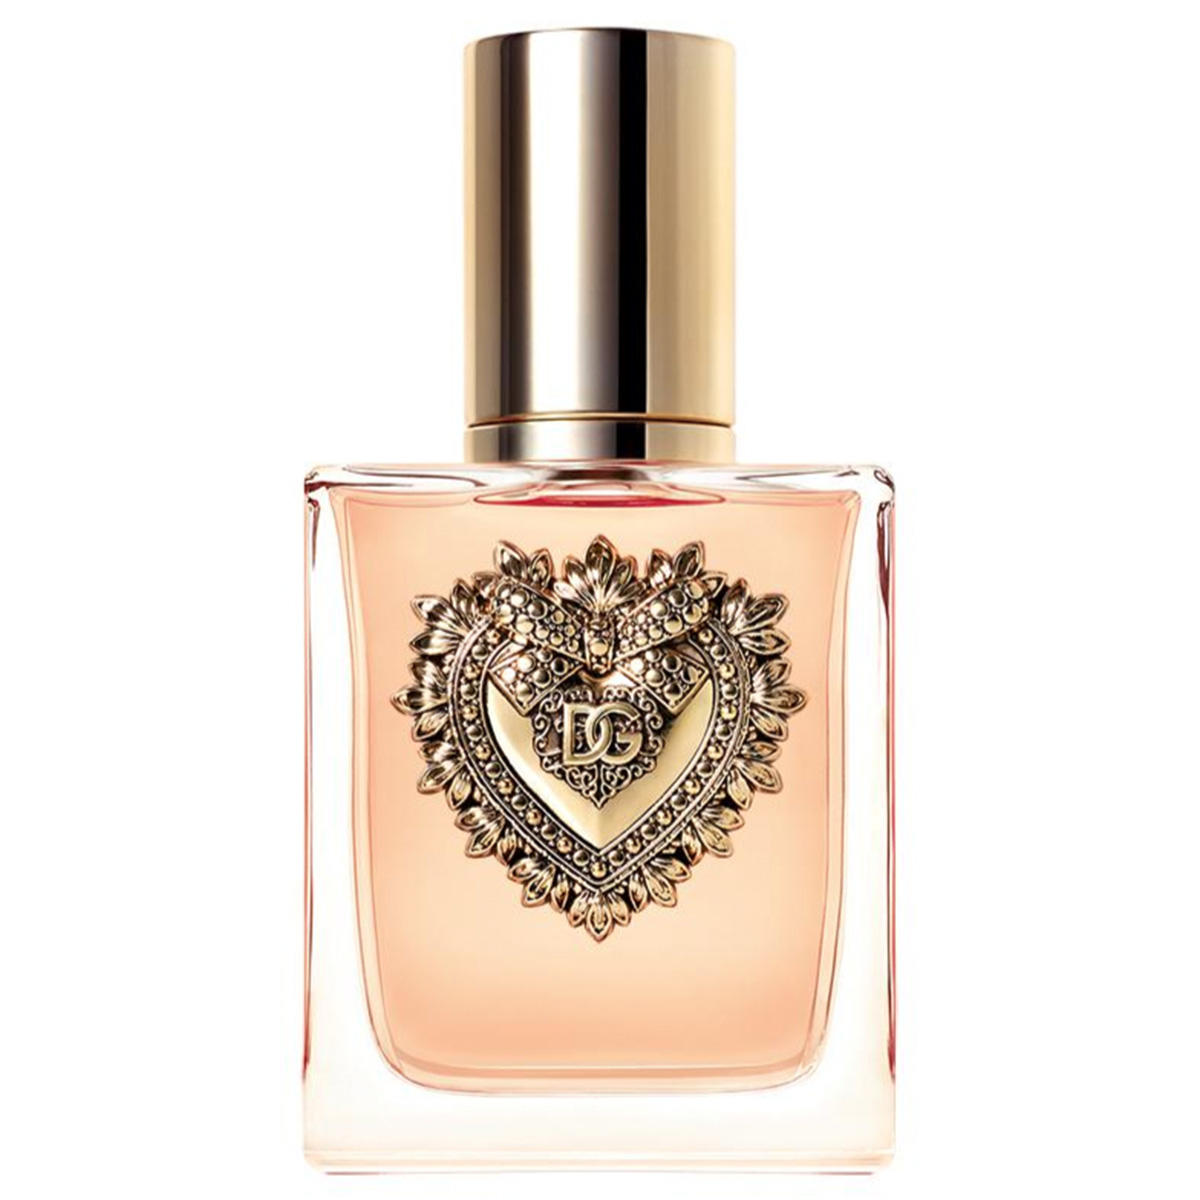 Dolce&Gabbana Devotion Eau de Parfum online kaufen | baslerbeauty